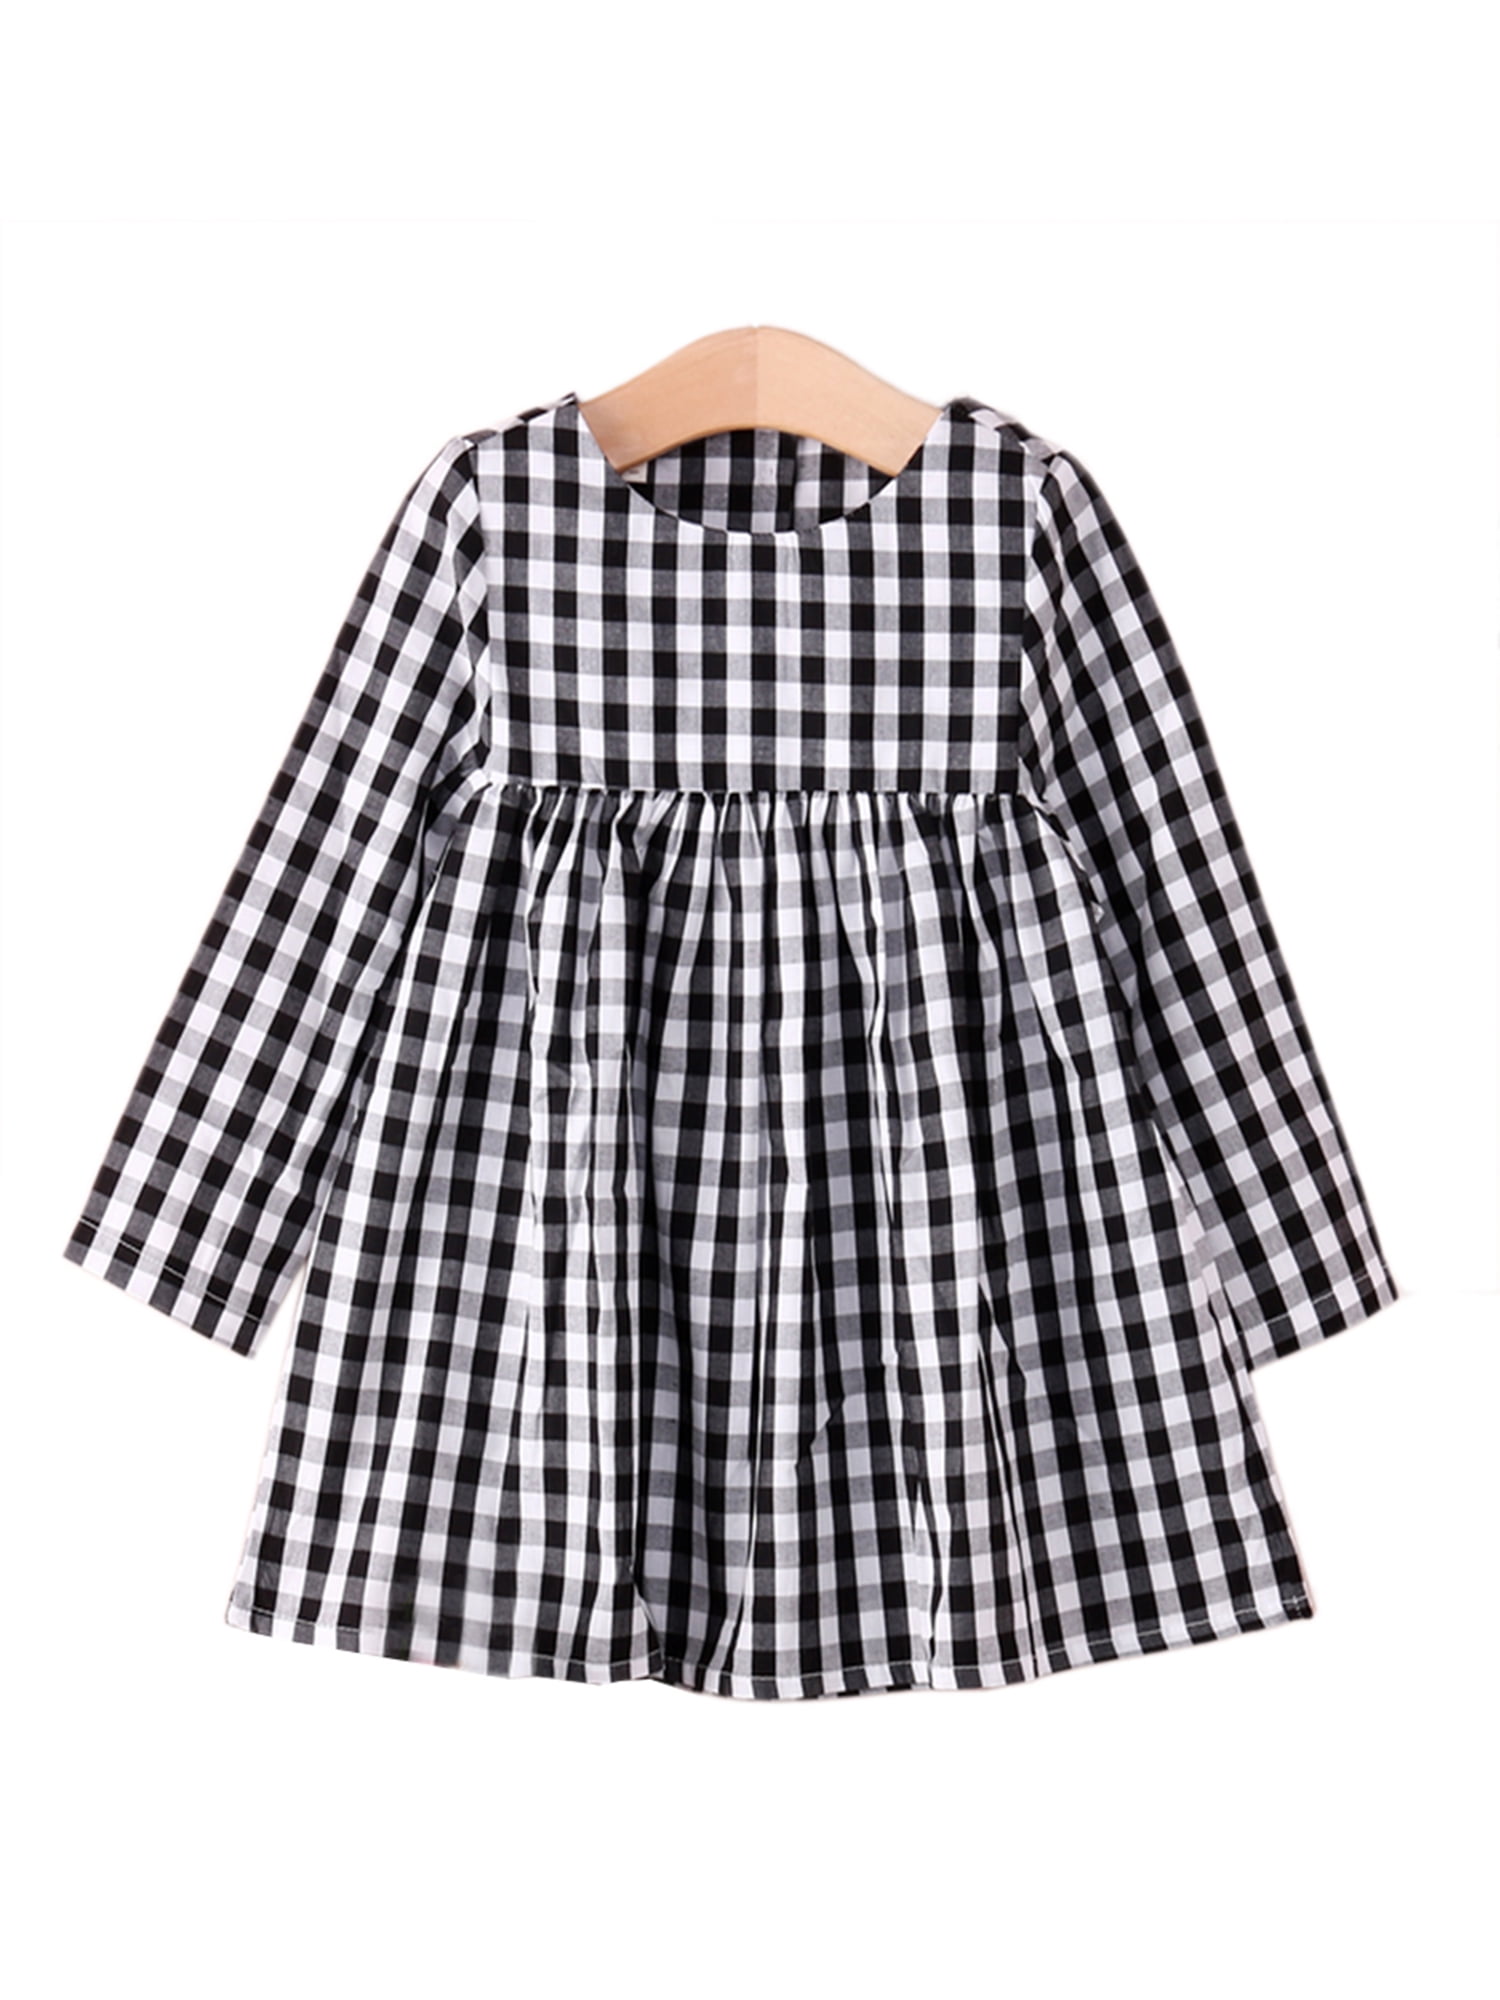 girls checkered dress